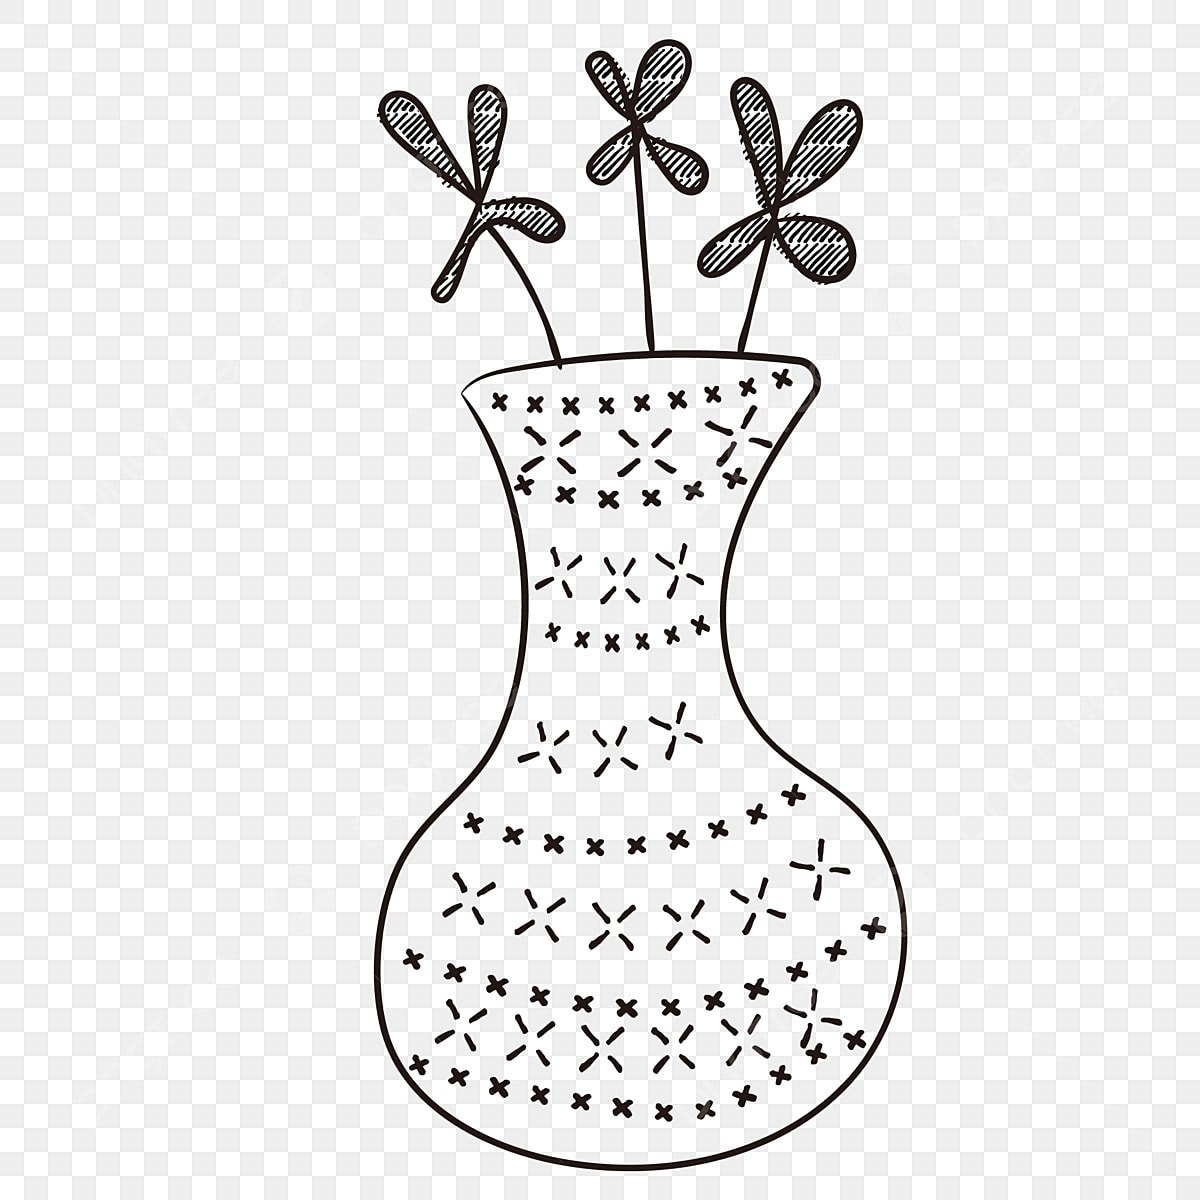 Ваза шаблон для вырезания распечатать. Трафарет вазы для цветов. Трафарет ваза для цветов. Шаблон ваза для цветов. Трафарет вазы для детей.